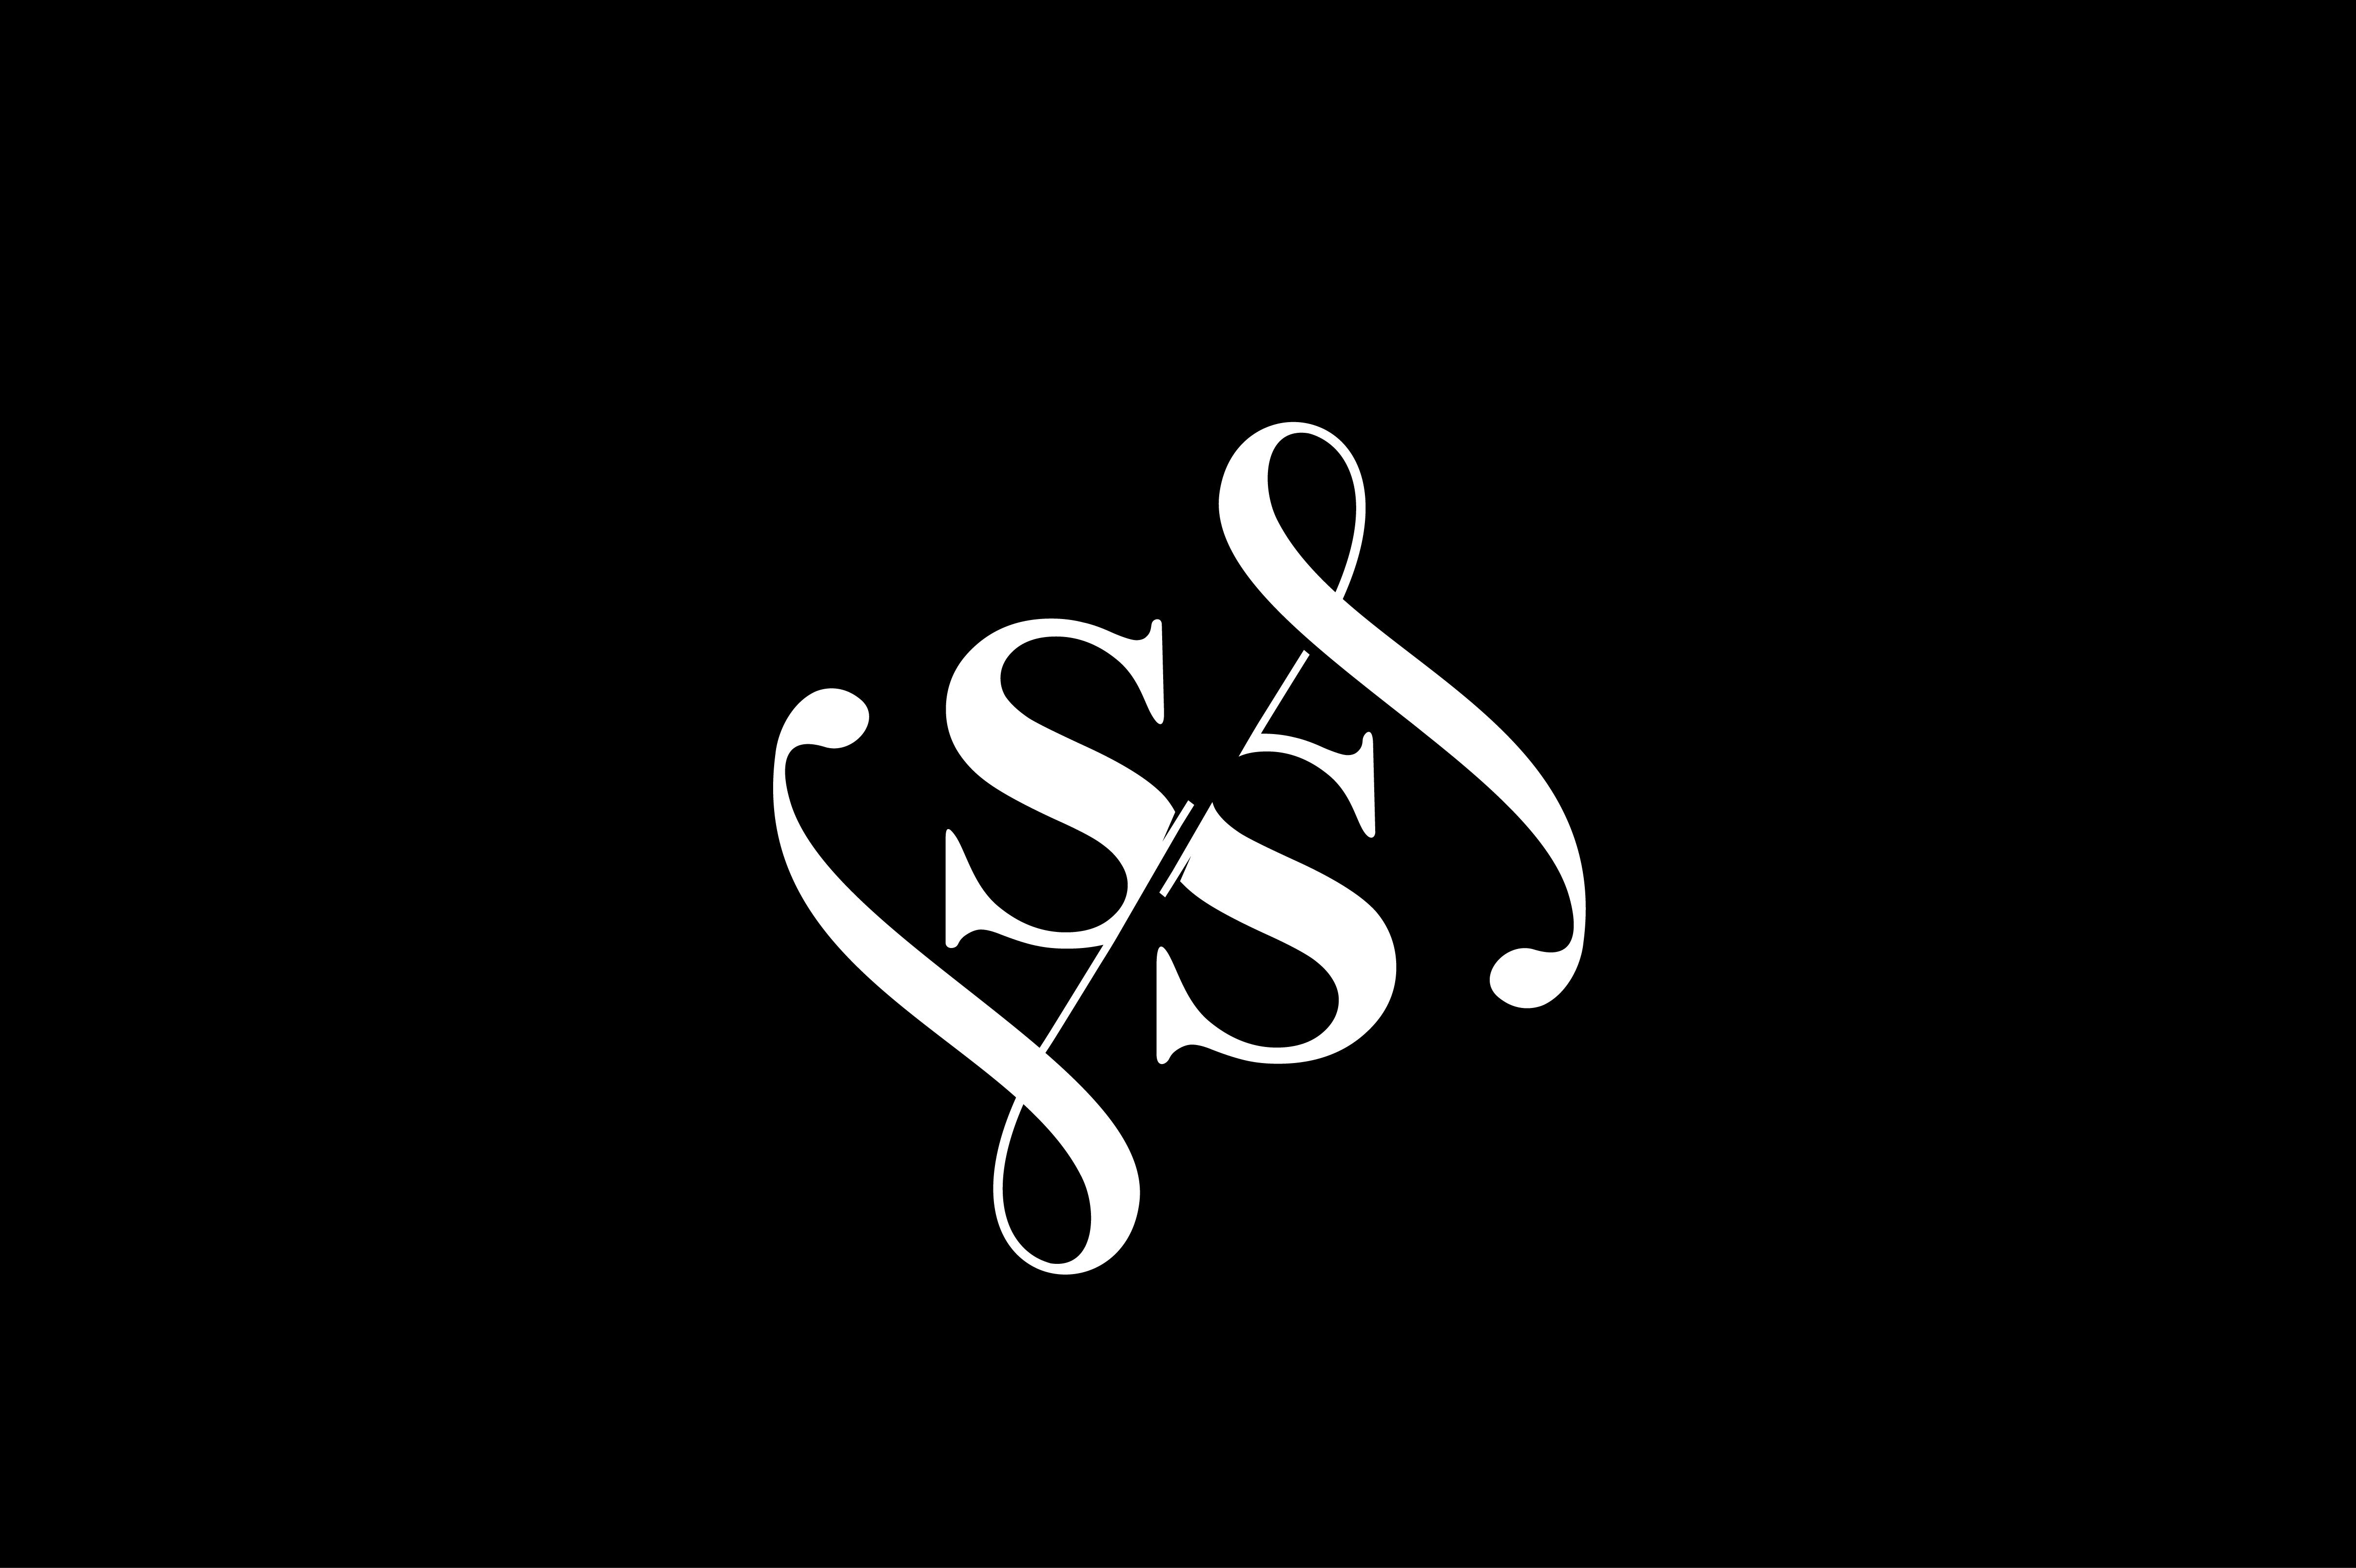 Ss Monogram Logo Design V6 By Vectorseller Thehungryjpeg